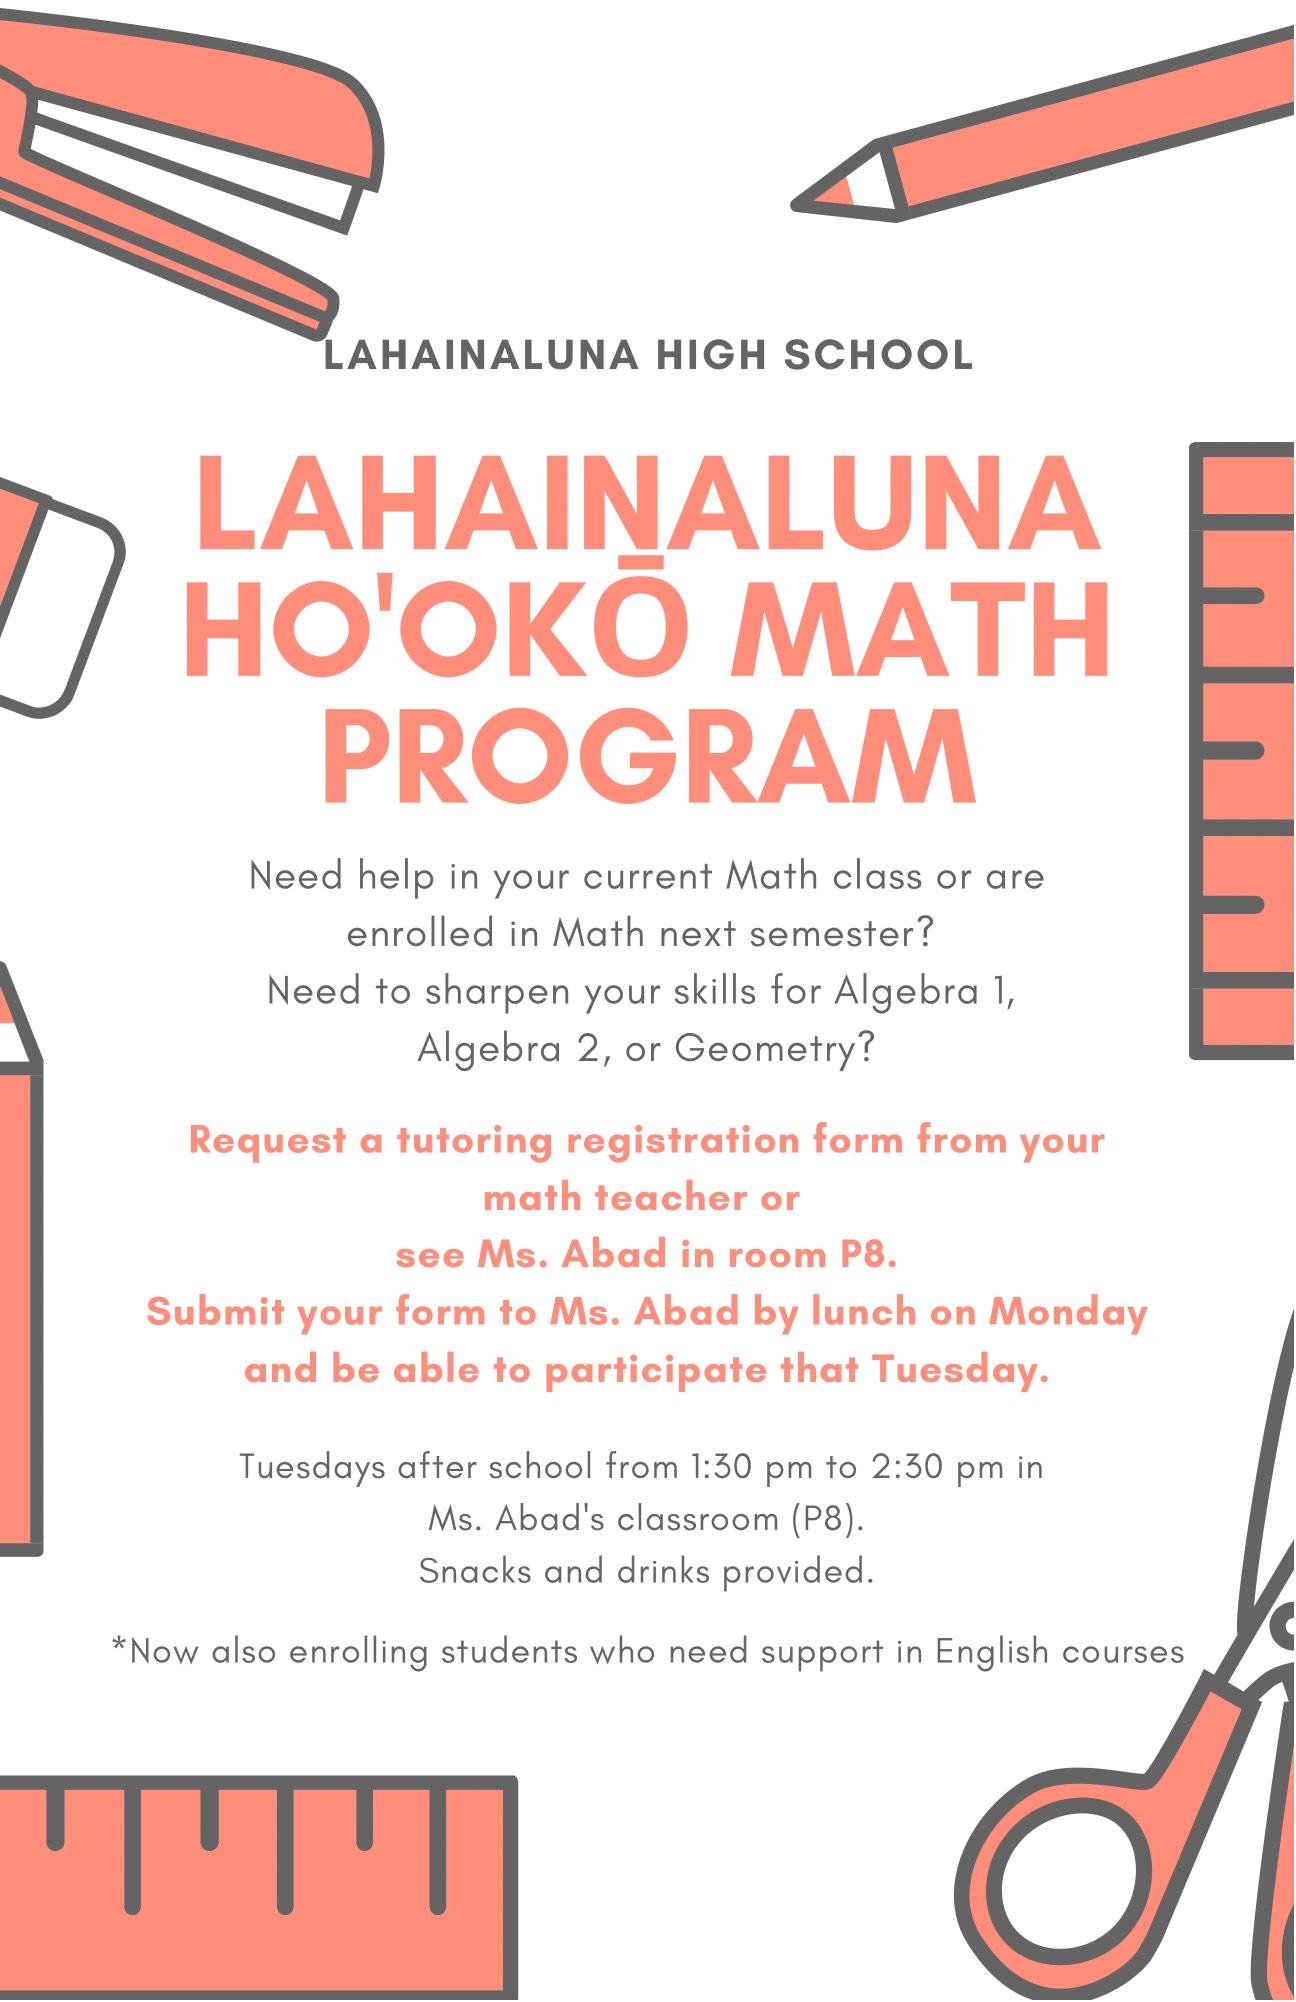 Lahainaluna Ho'oko Math Program Flyer